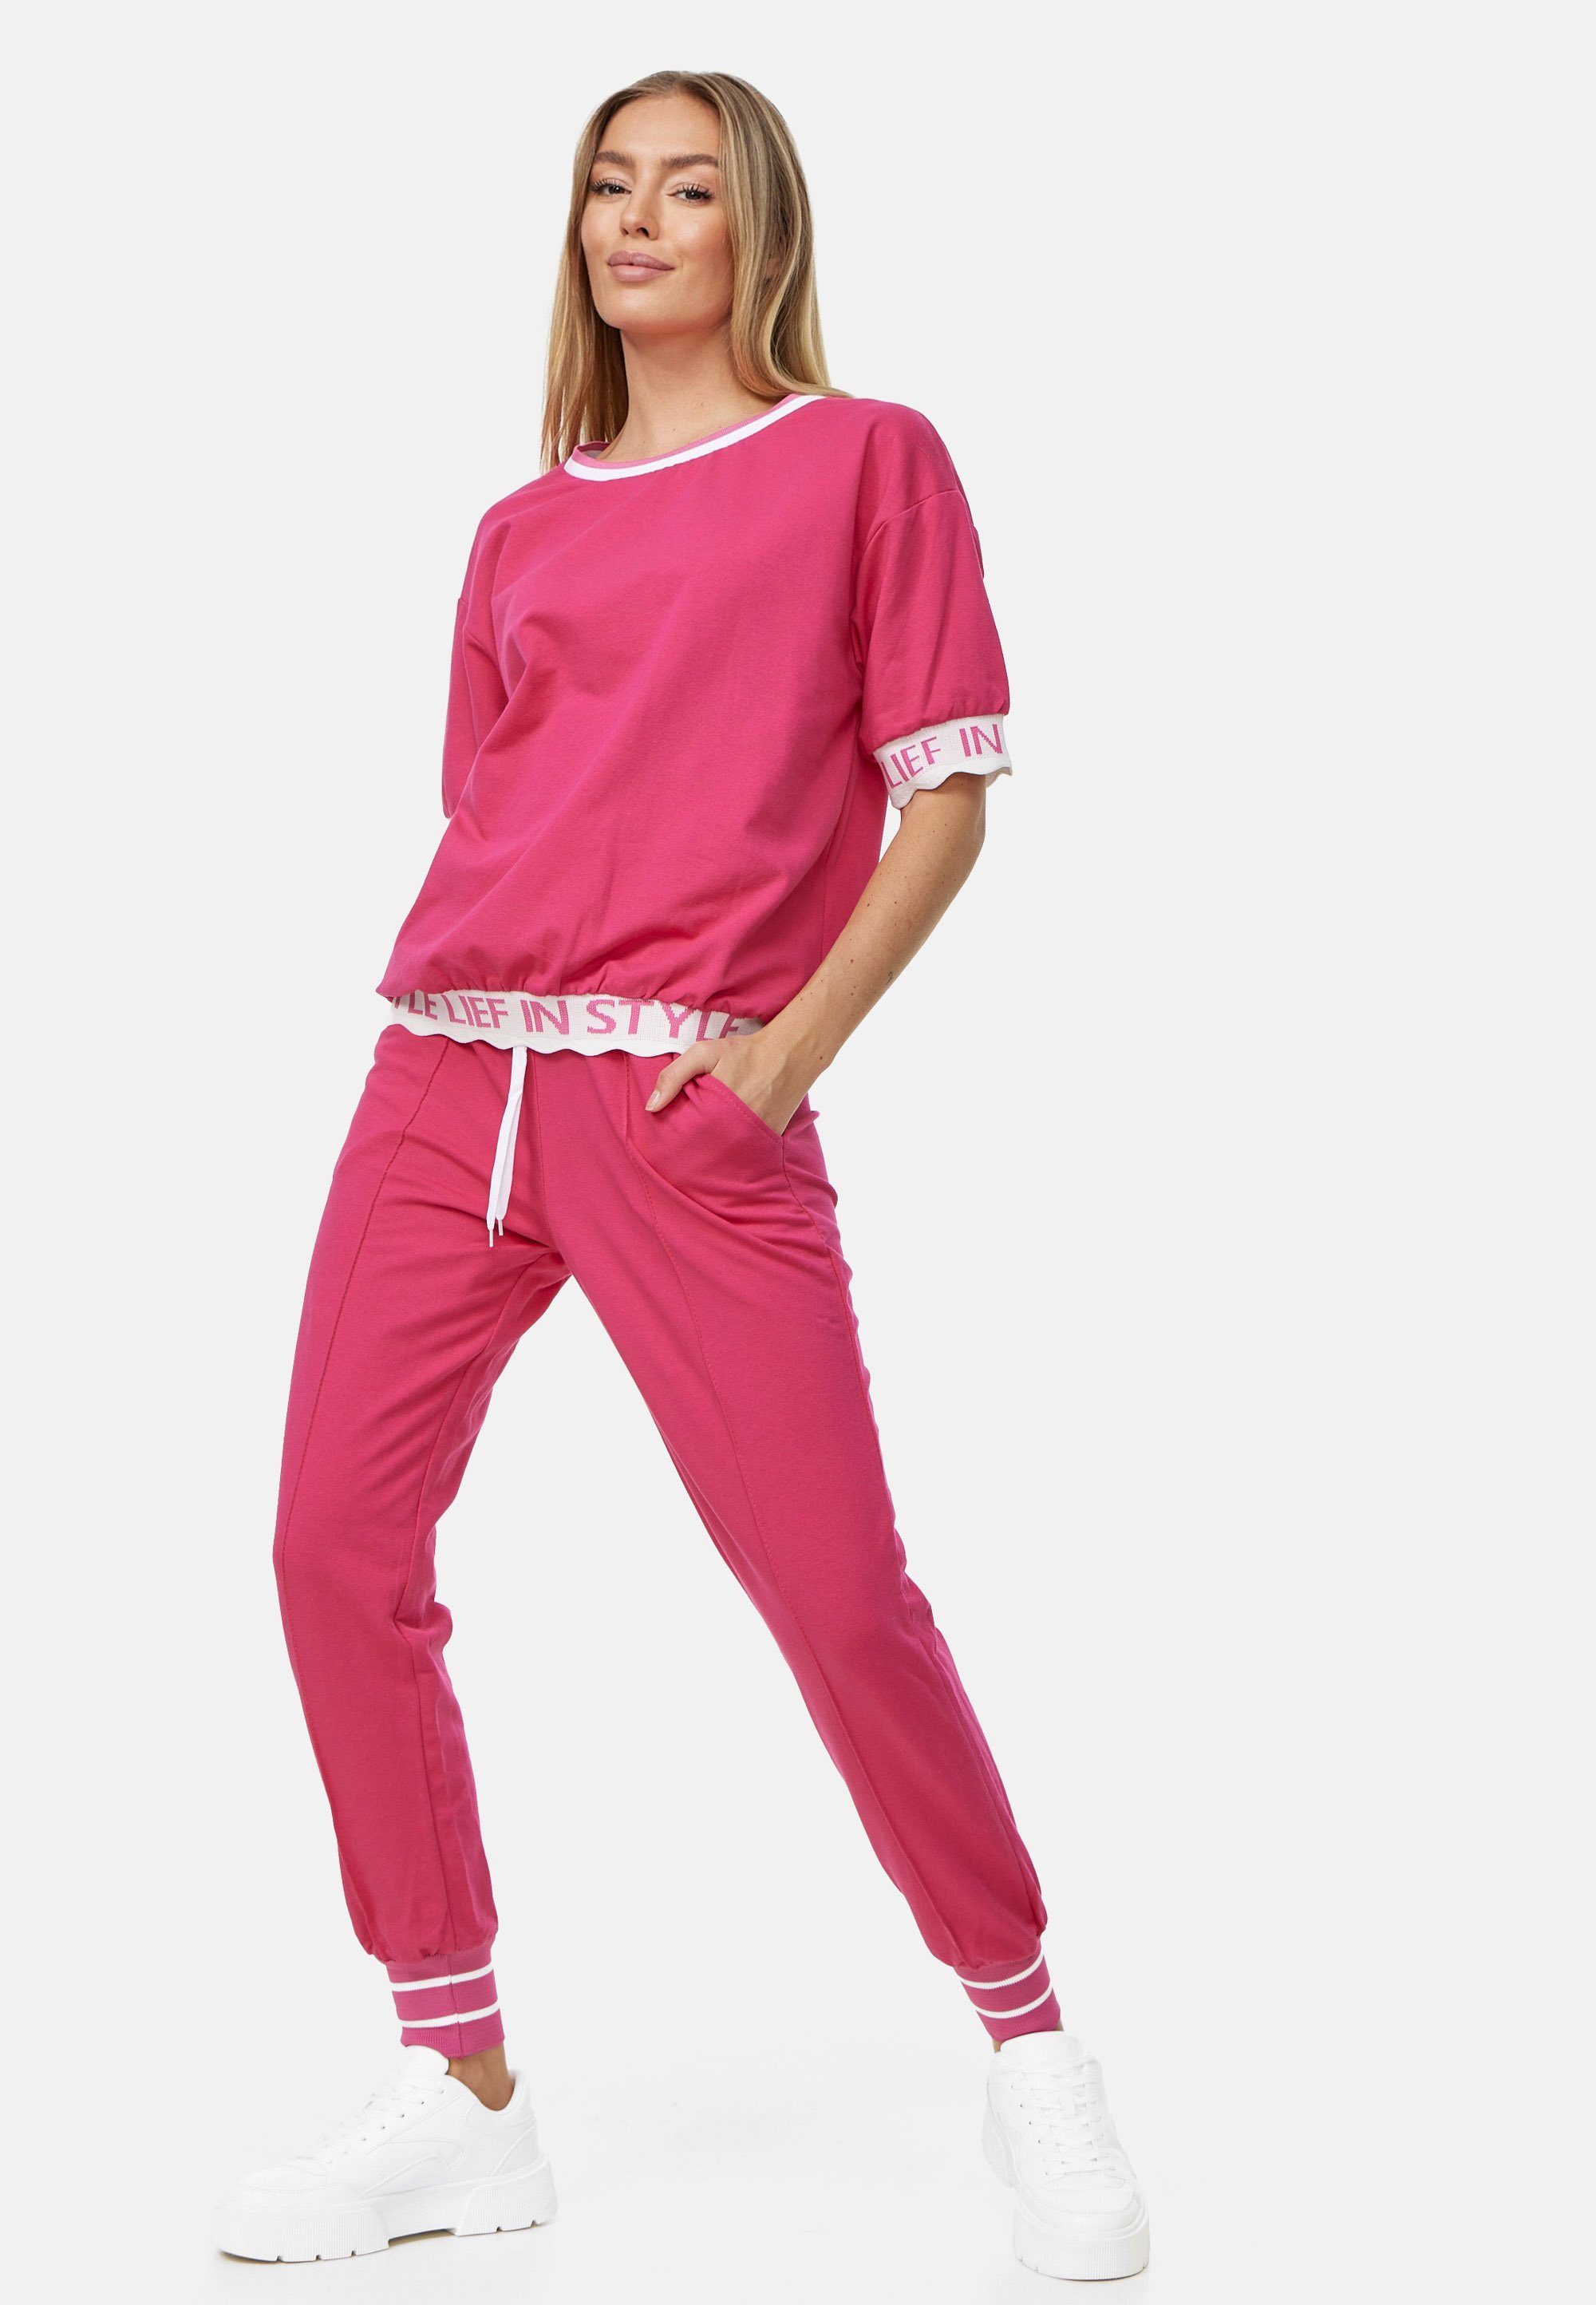 stylishem Decay T-Shirt Schriftzug mit rosa